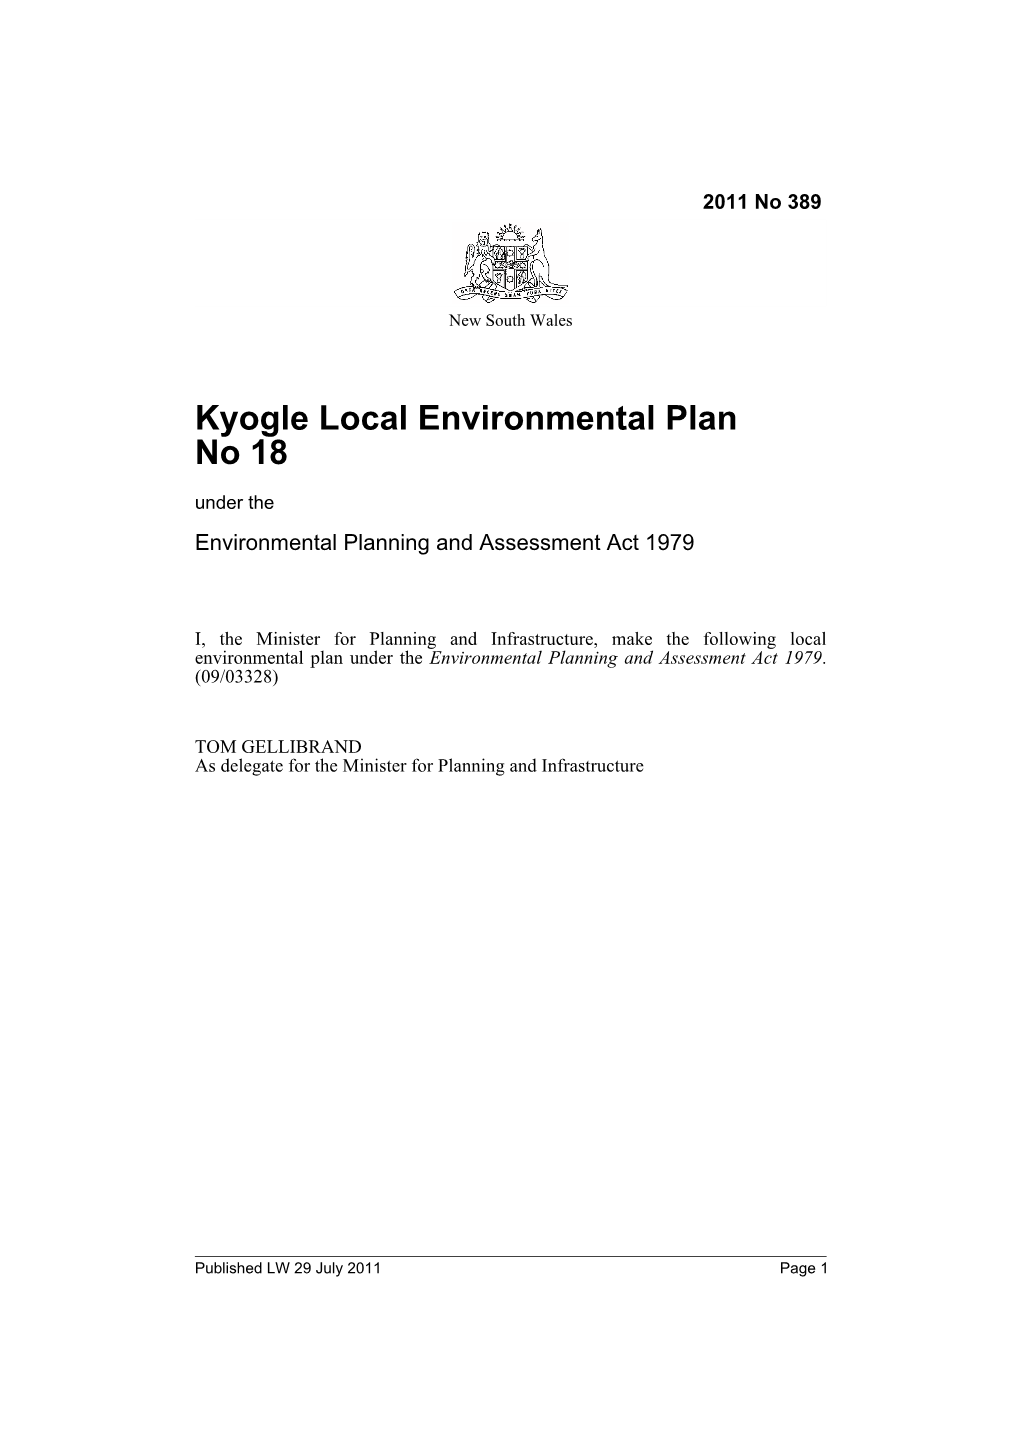 Kyogle Local Environmental Plan No\ 18